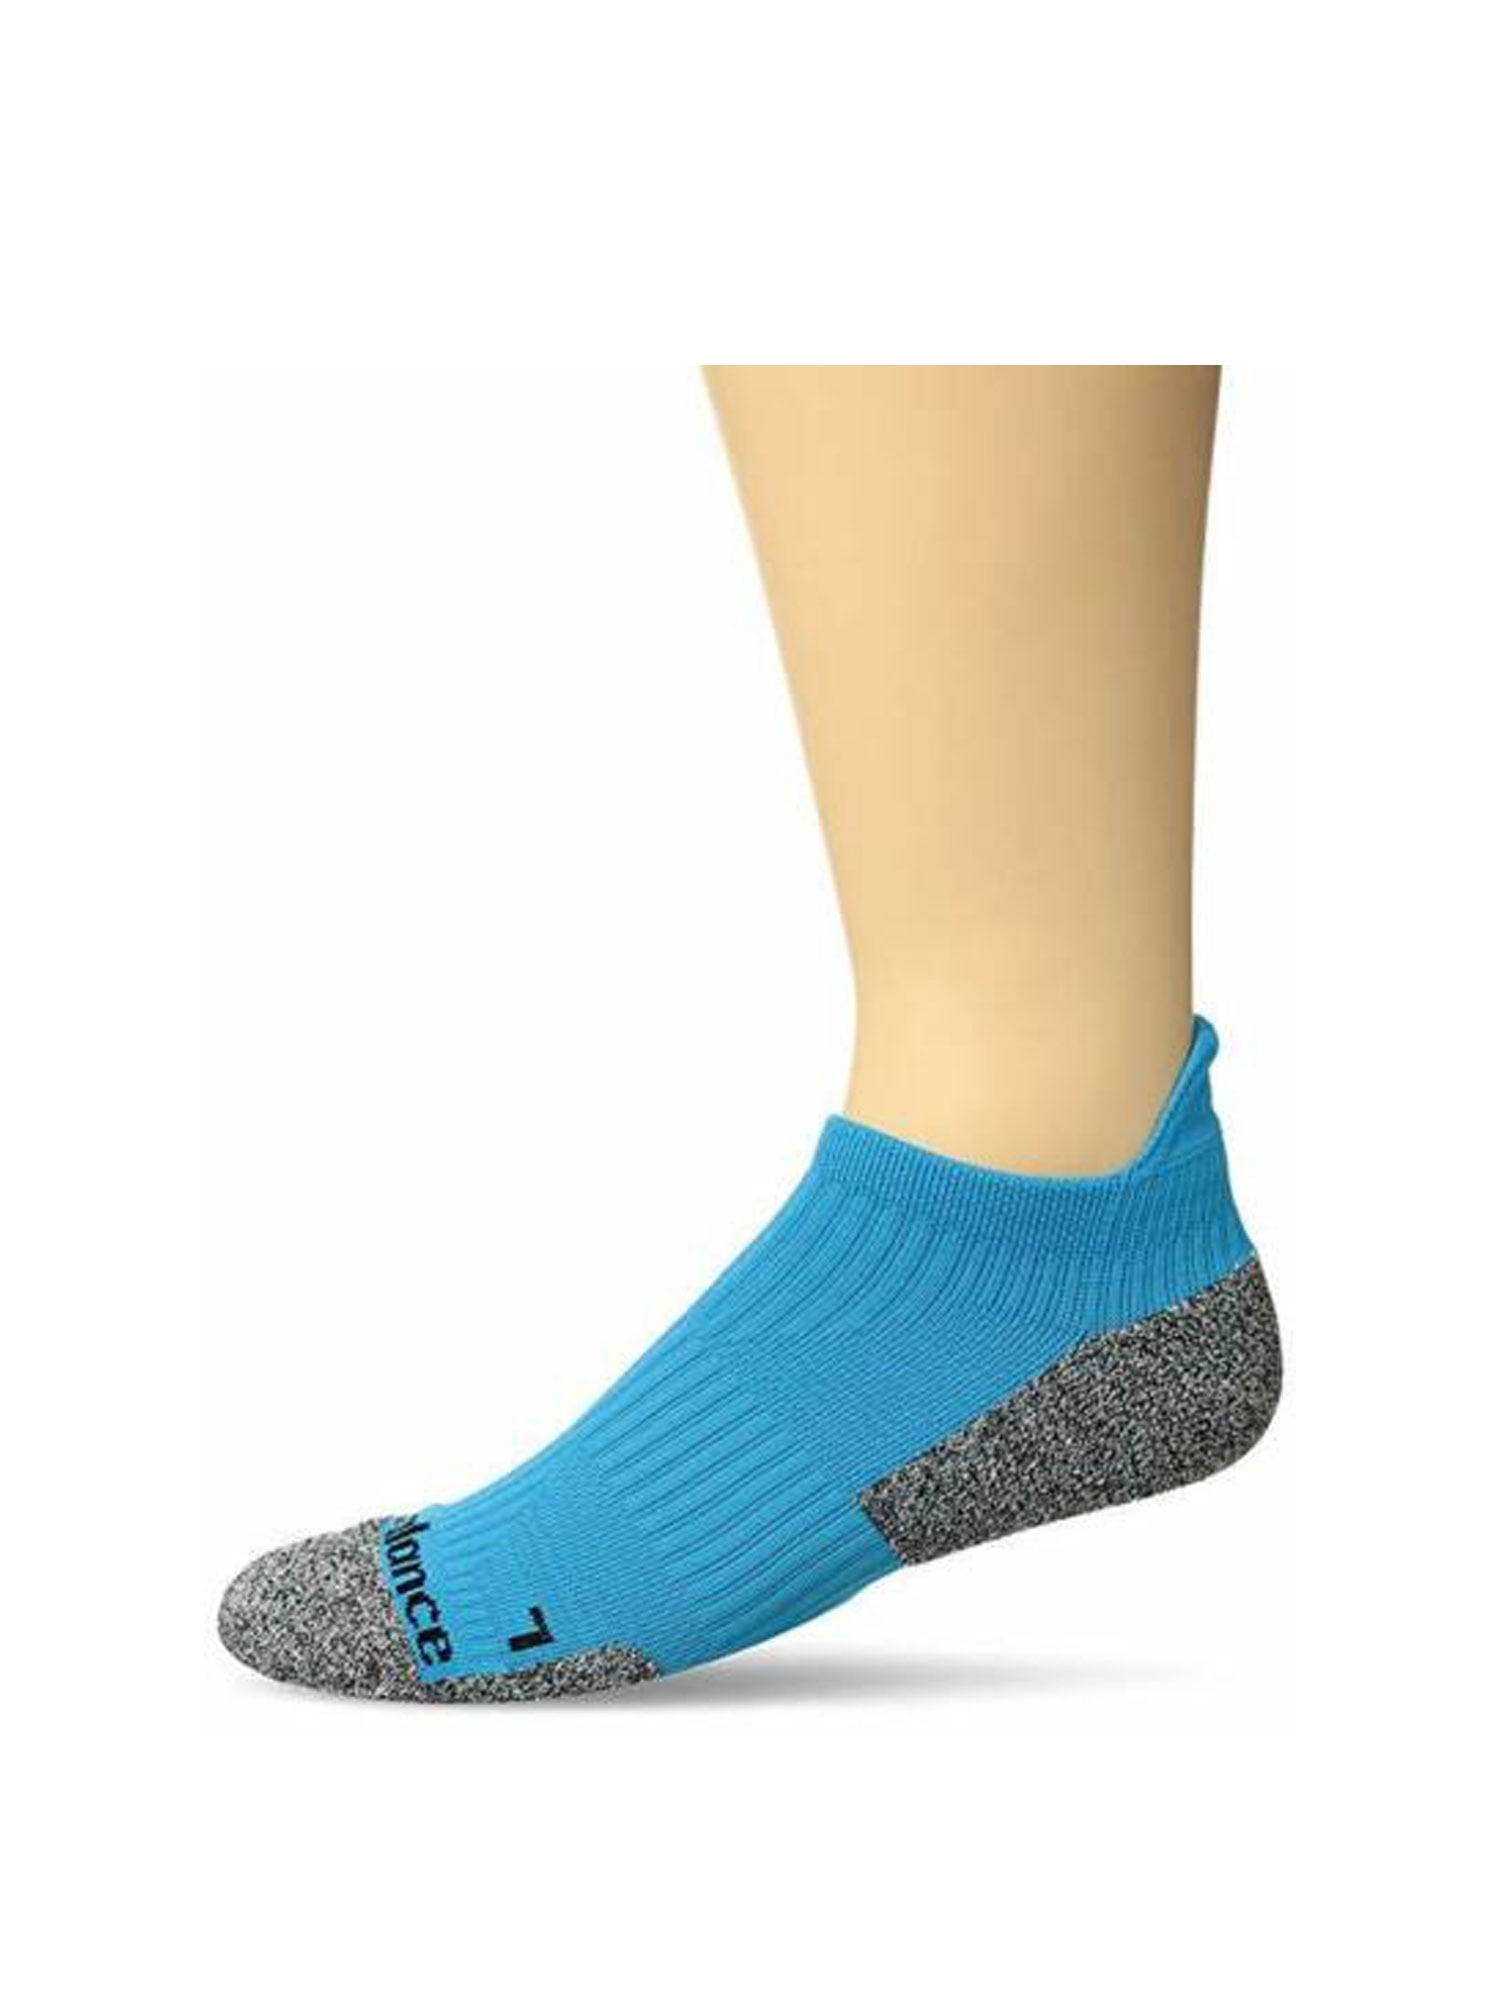 new balance socks near me